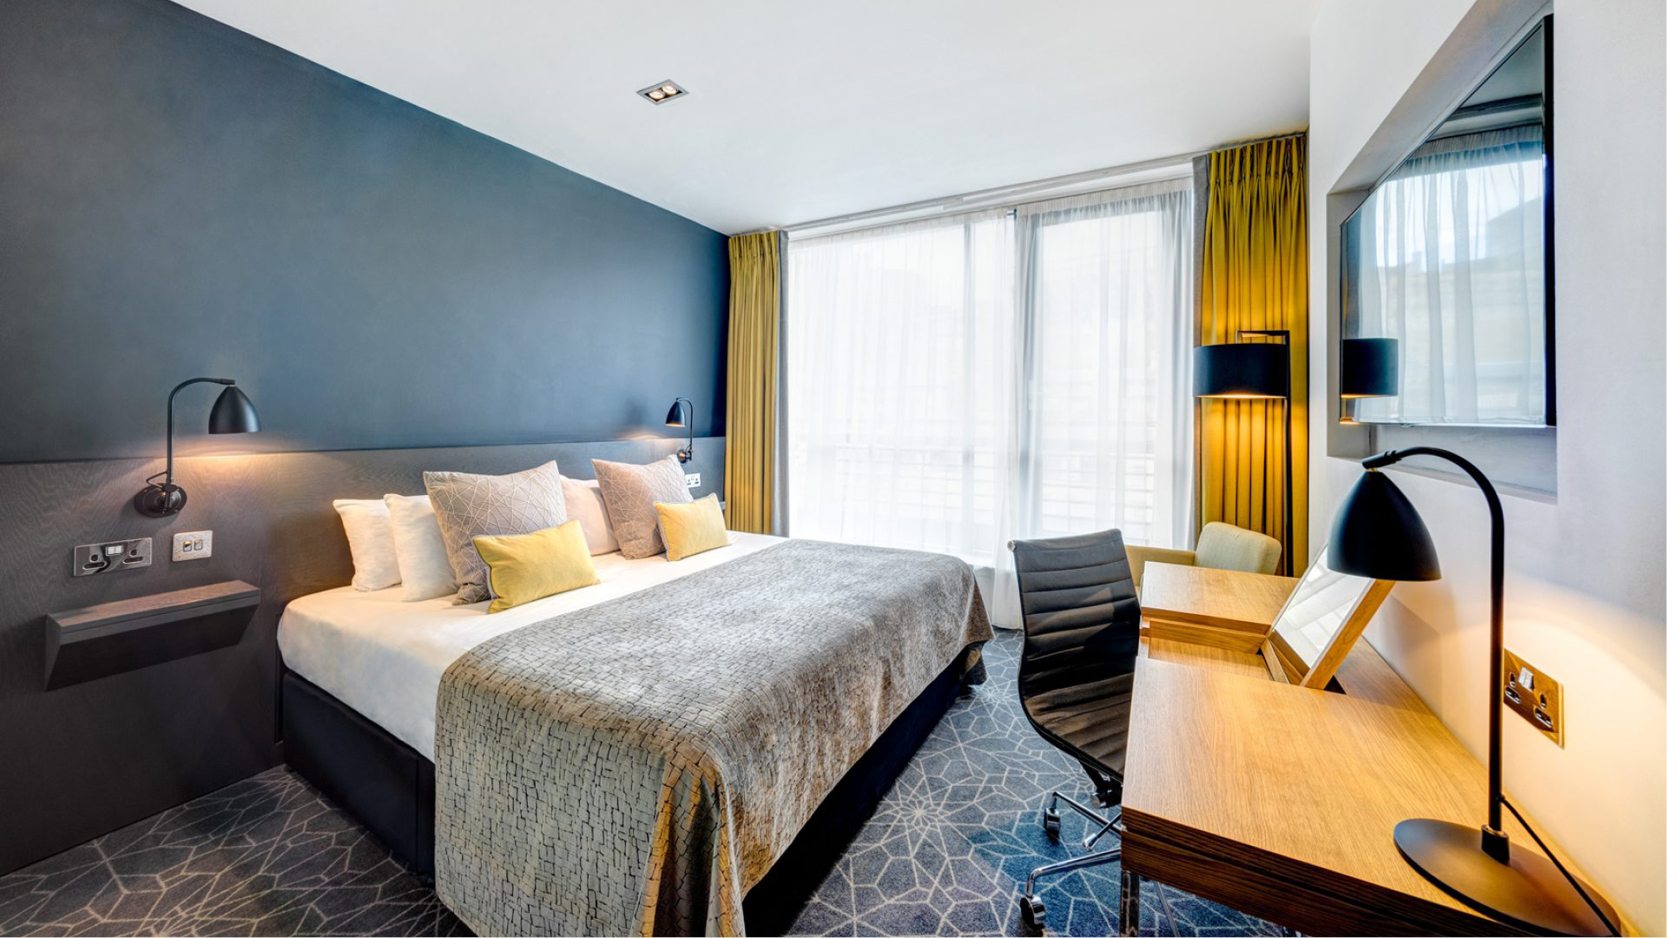 Sovrum p 4-stjrniga Apex hotel i centrala Bath.